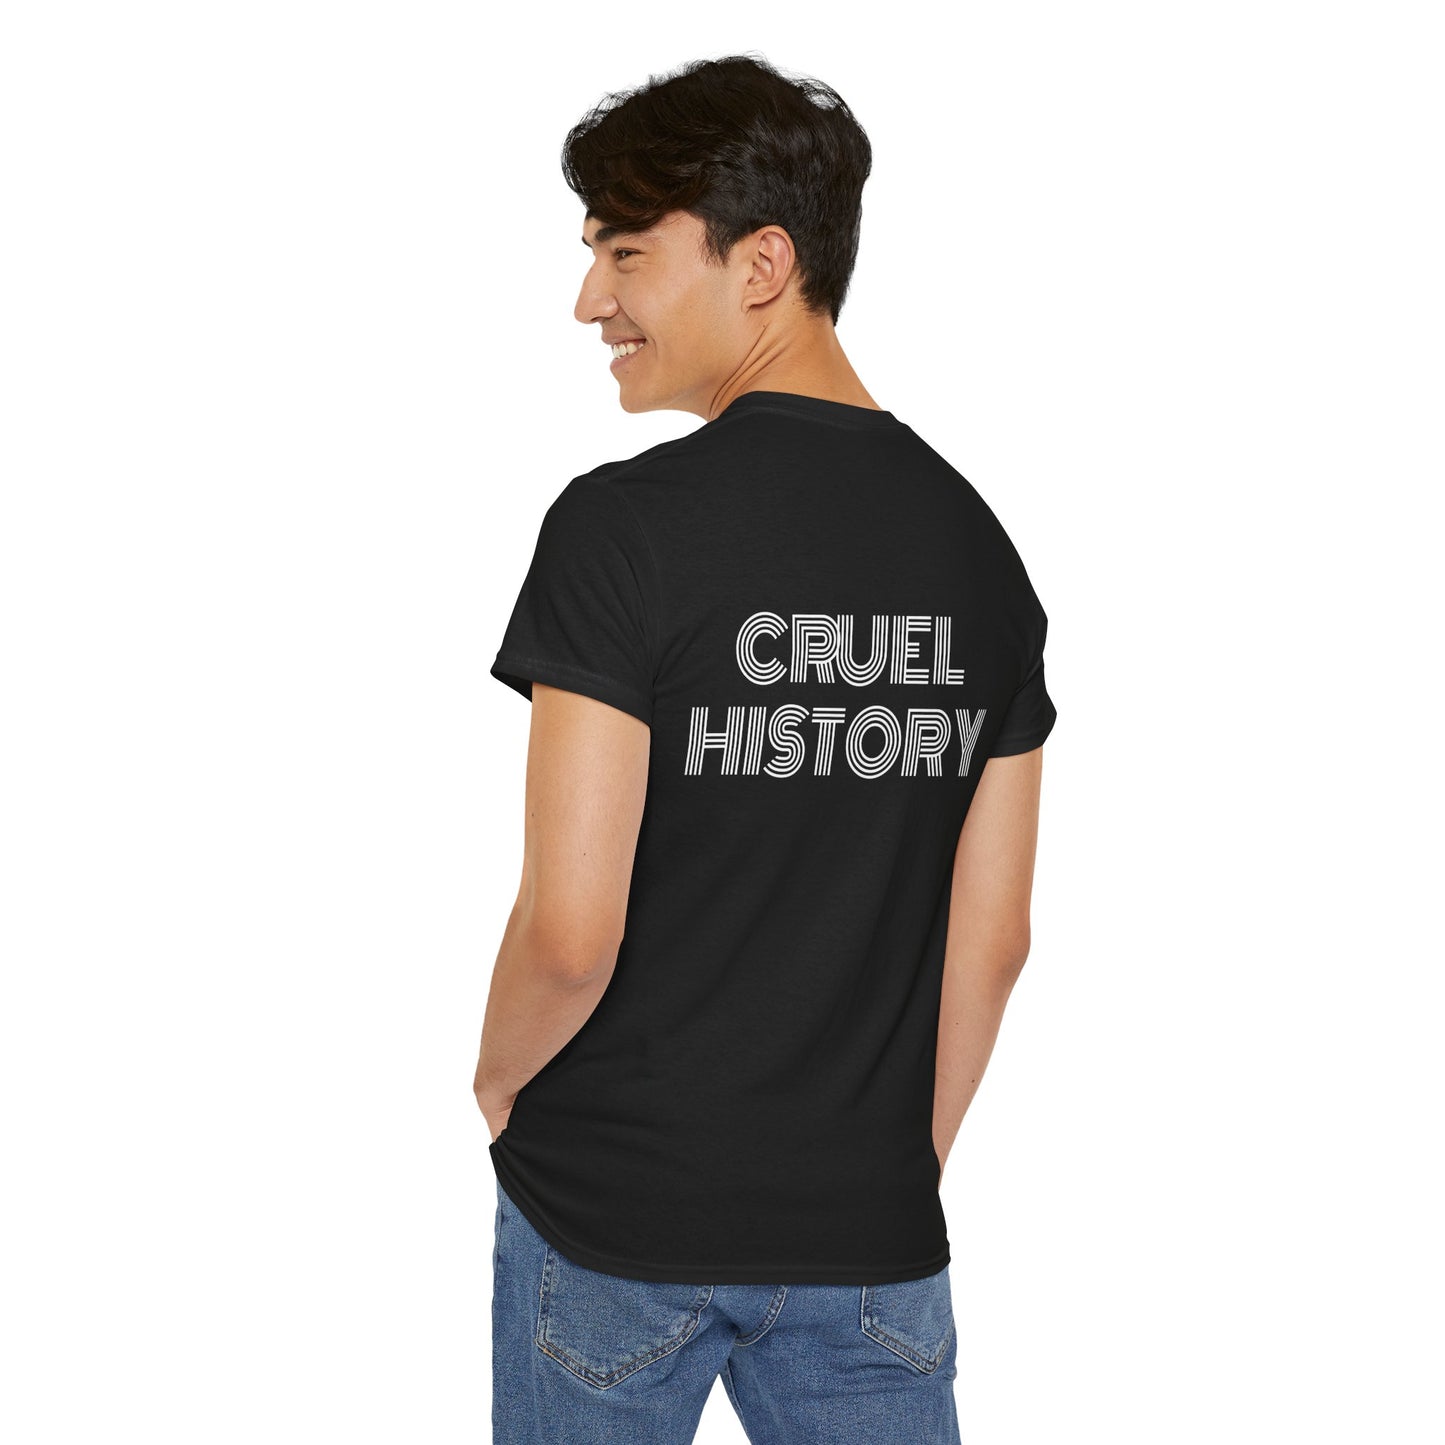 Cruel History - T-Shirt | Wear History's Lessons